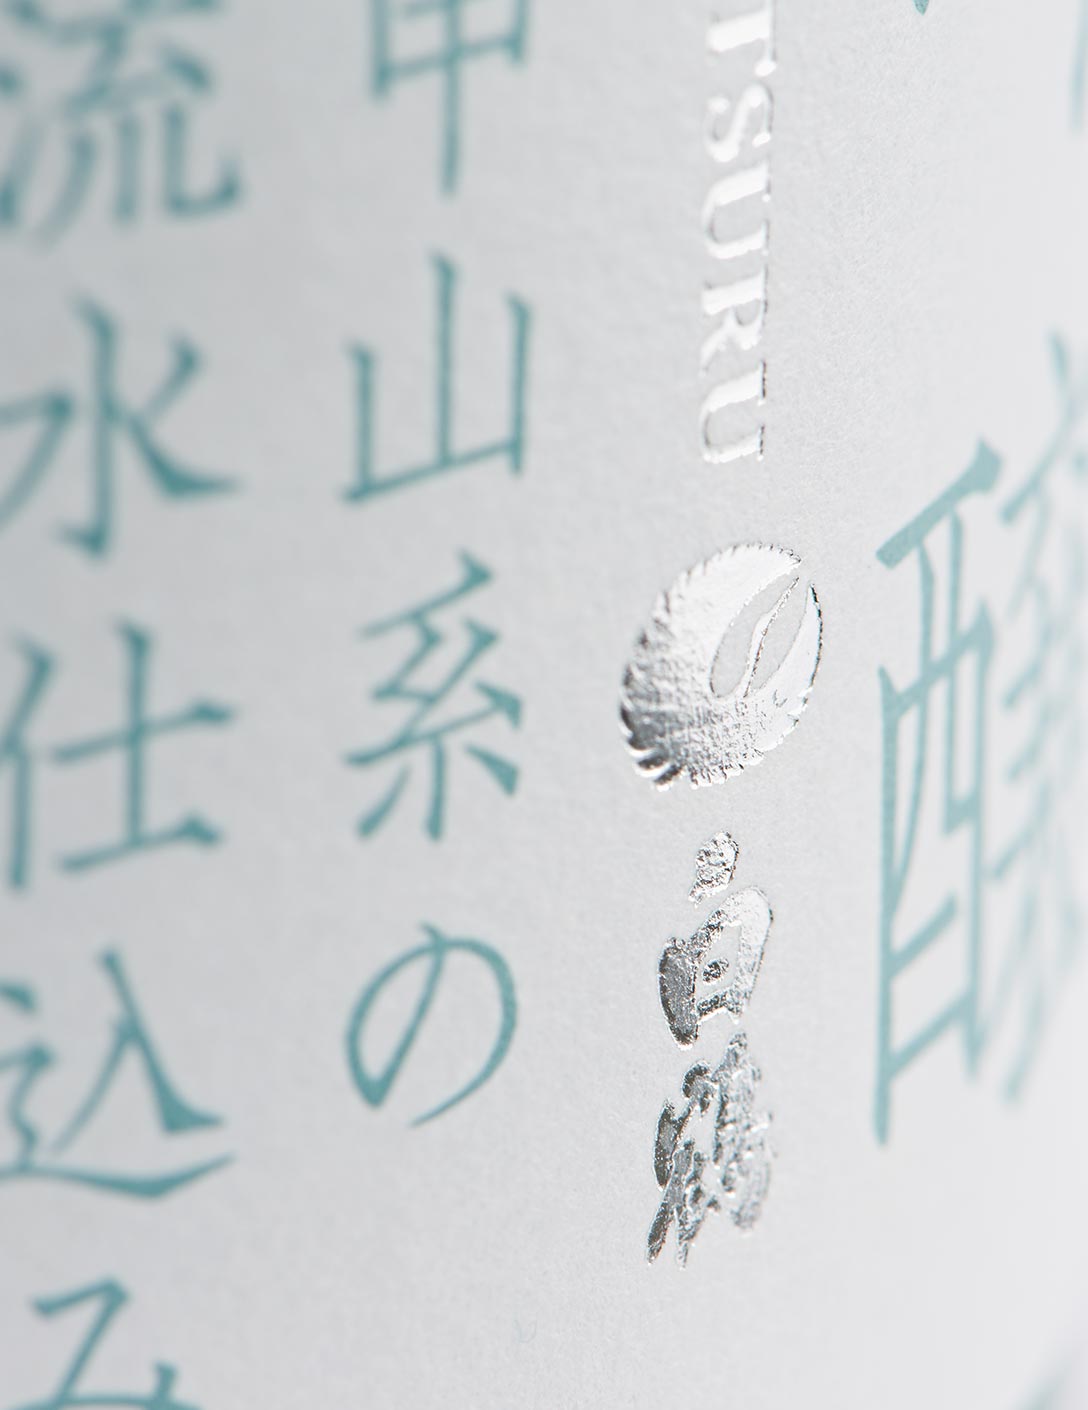 Special select Hakutsuru Junmai Ginjo saké, made with underground water fromthe Rokko